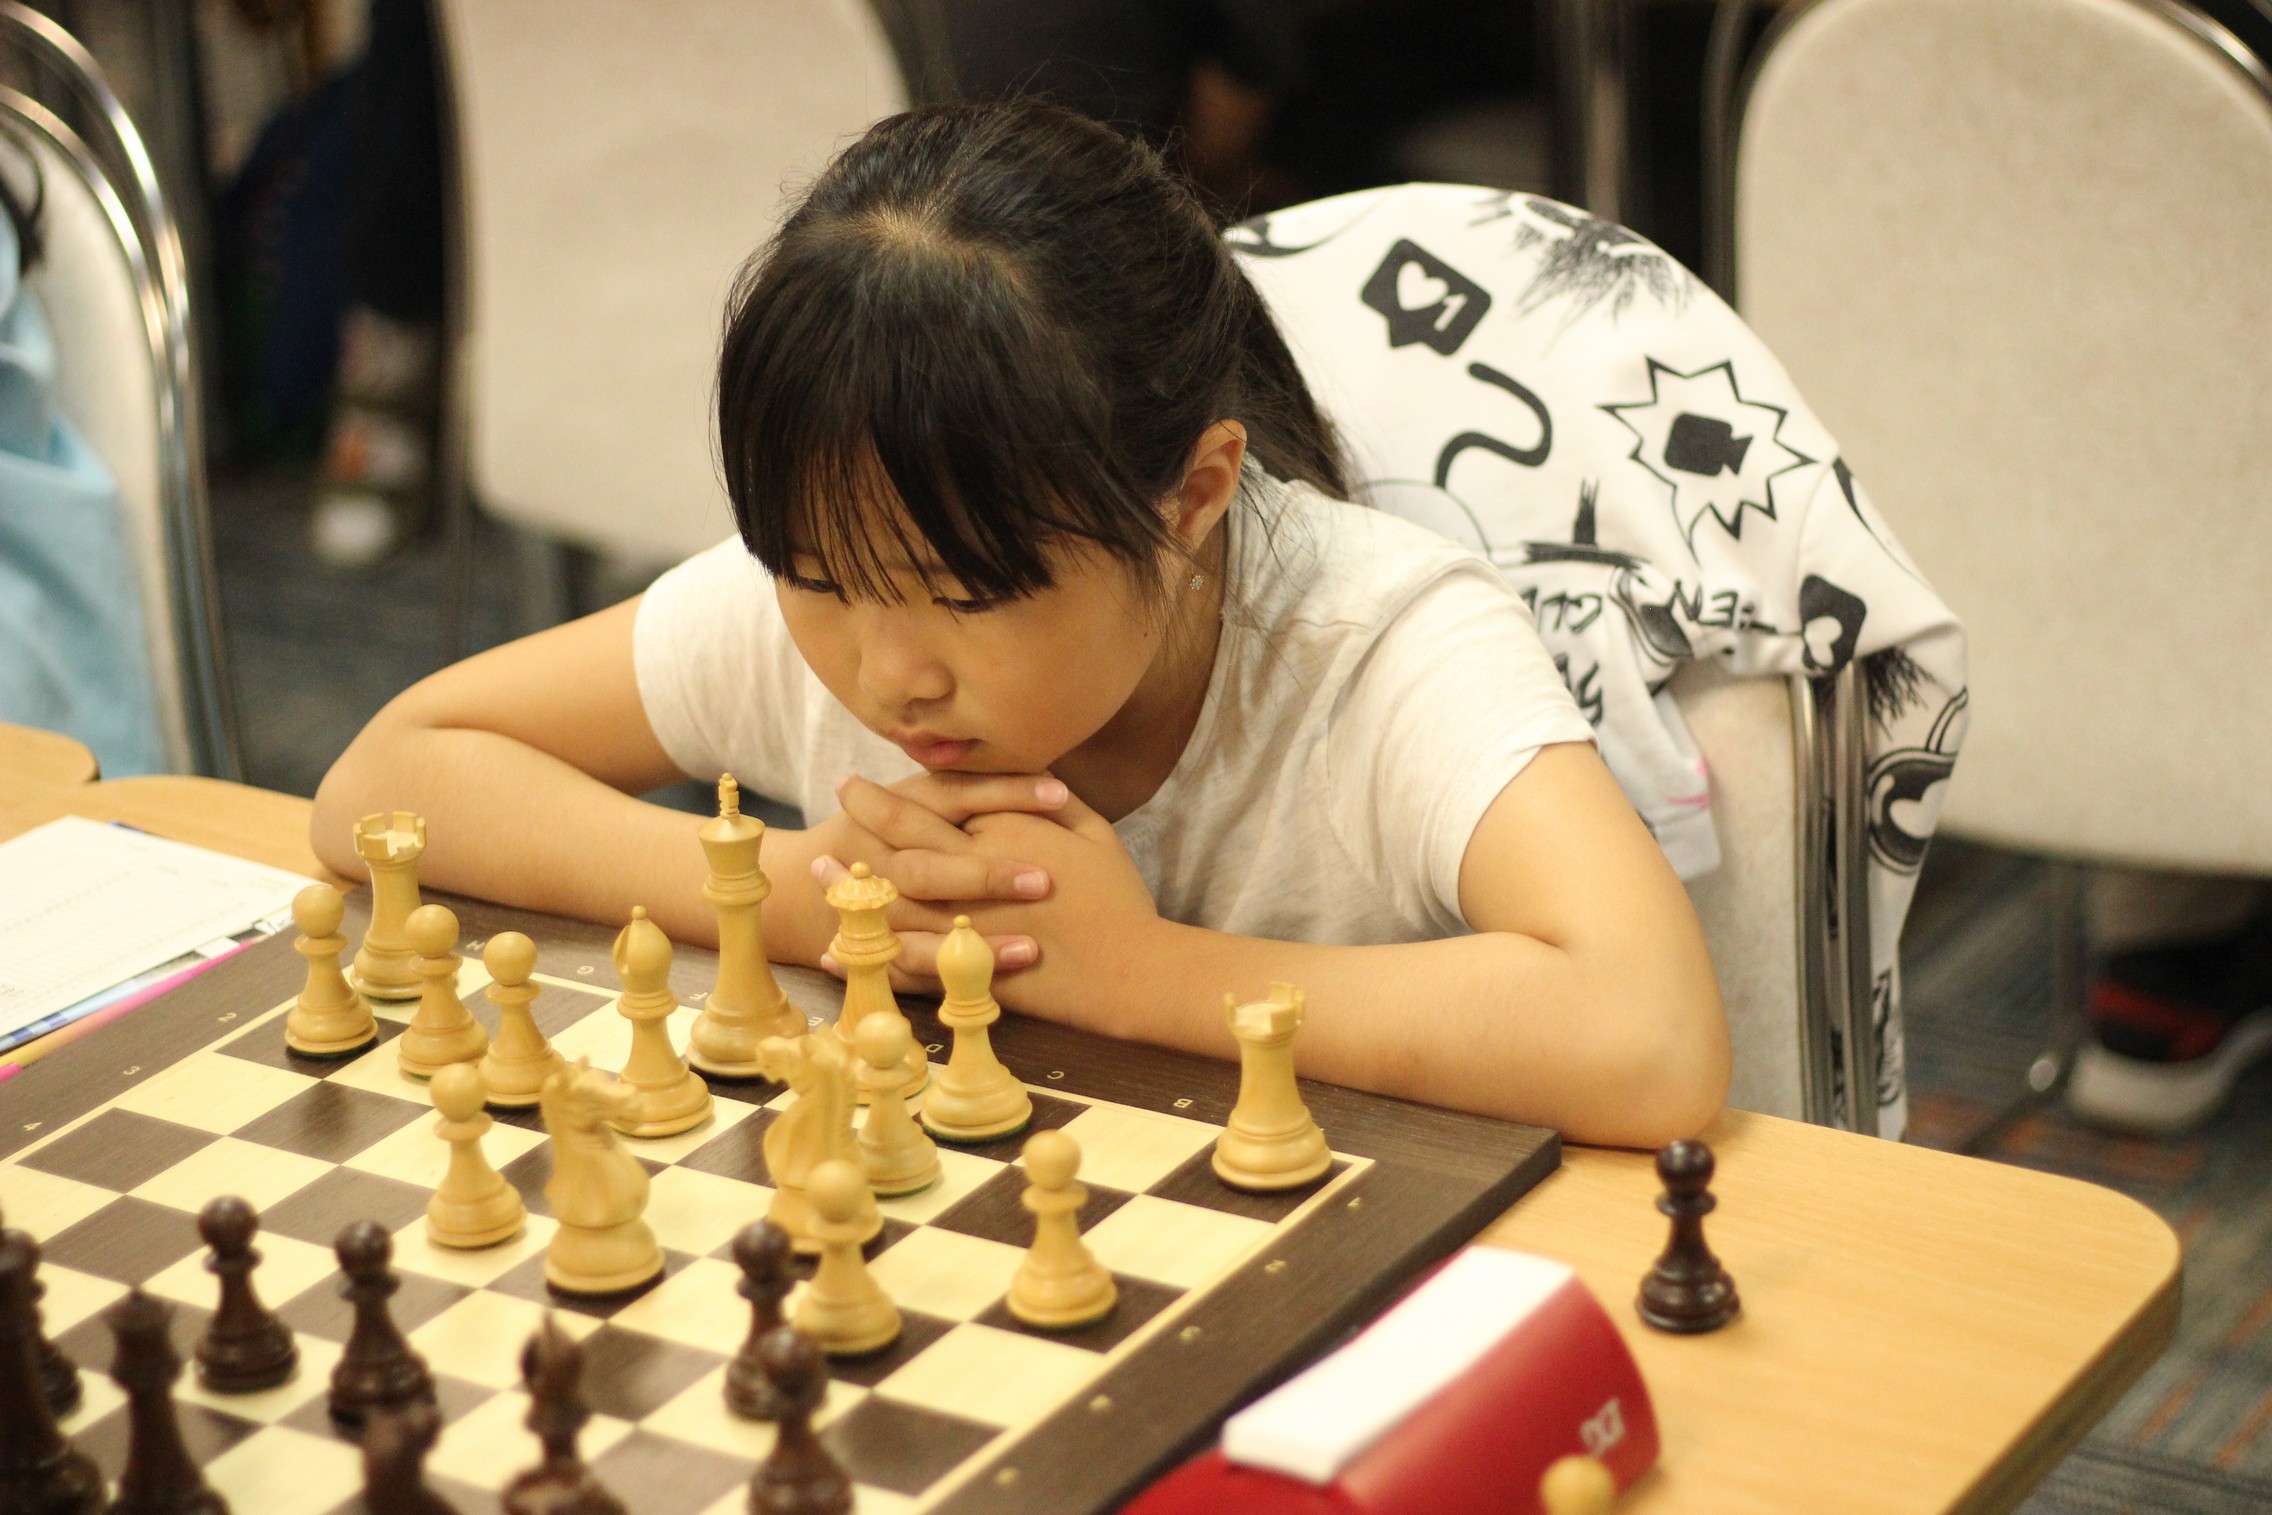 Шахматы Южно-Сахалинск. Турнир по шахматам. Дети играют в шахматы.